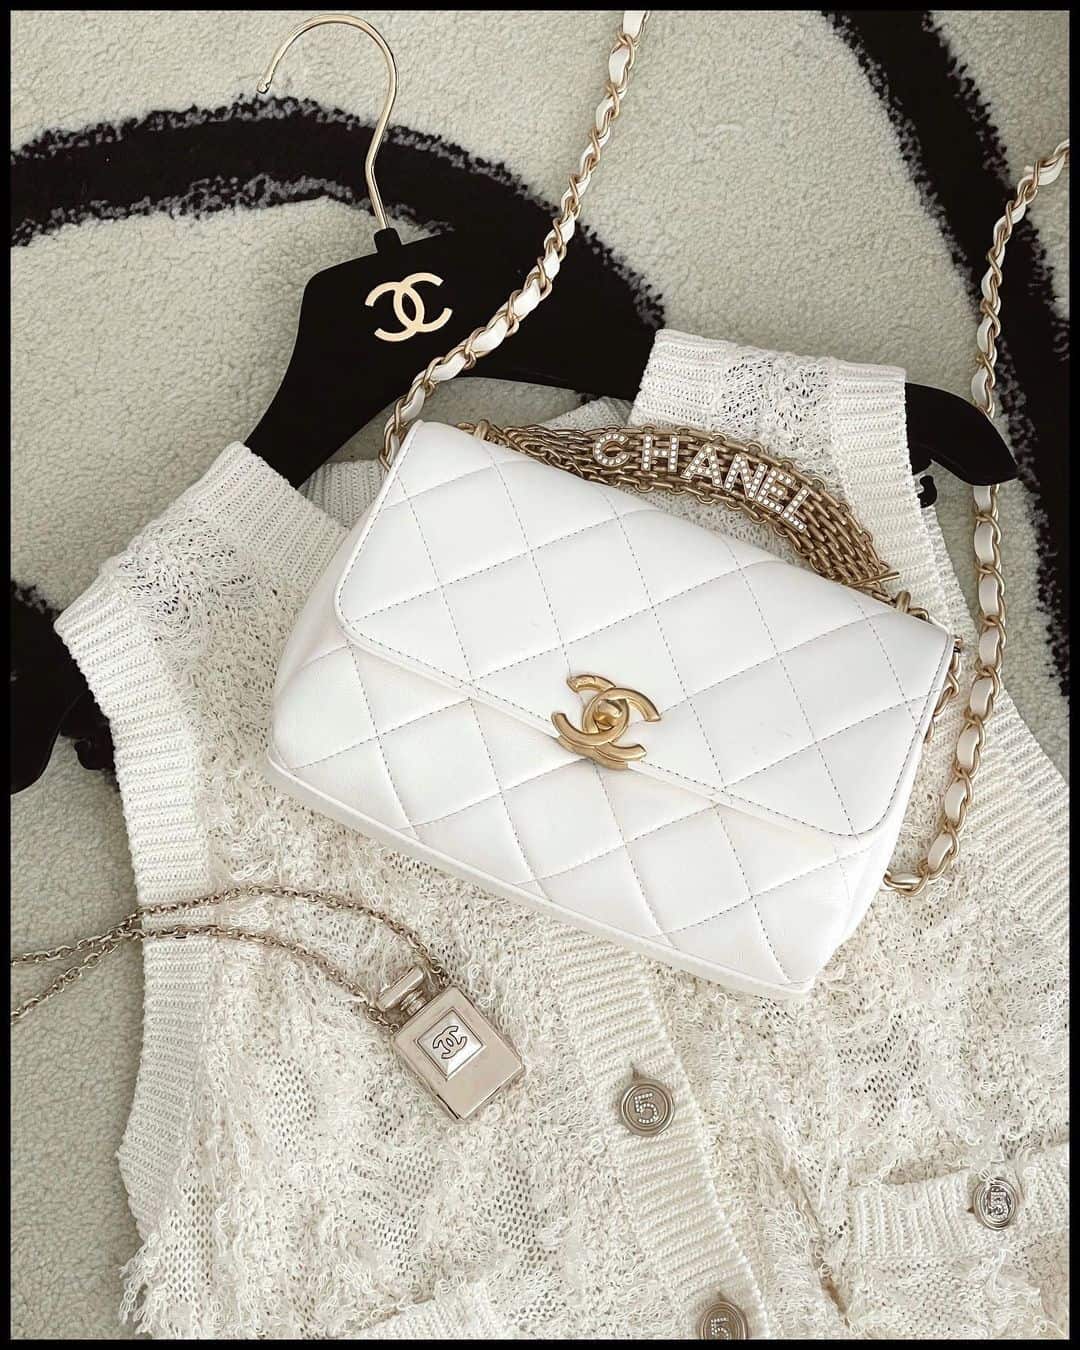 Chanel Price Increase List in Europe 2022 • Petite in Paris